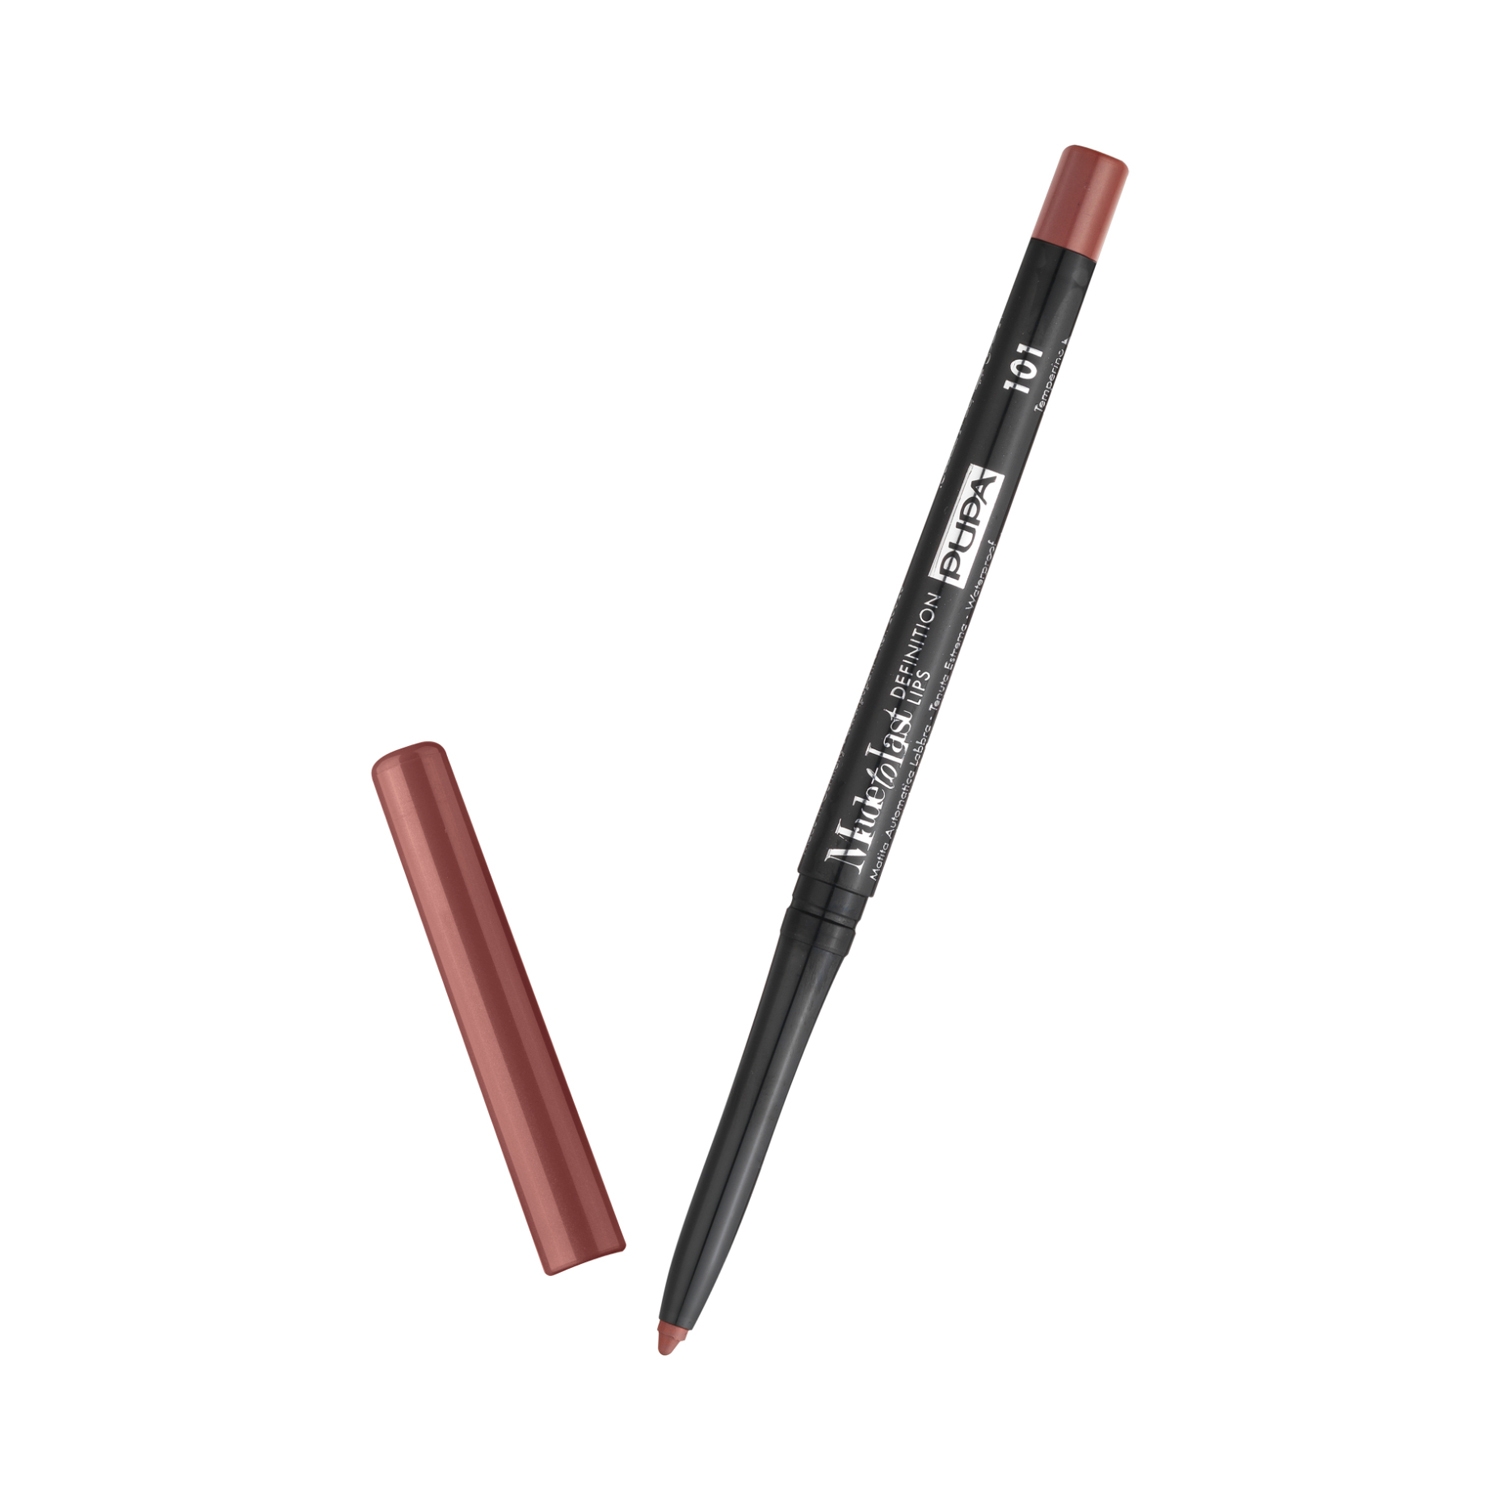 Pupa Milano Made To Last Definition Lip Pencil - 101 Natural Brown (0.35g)